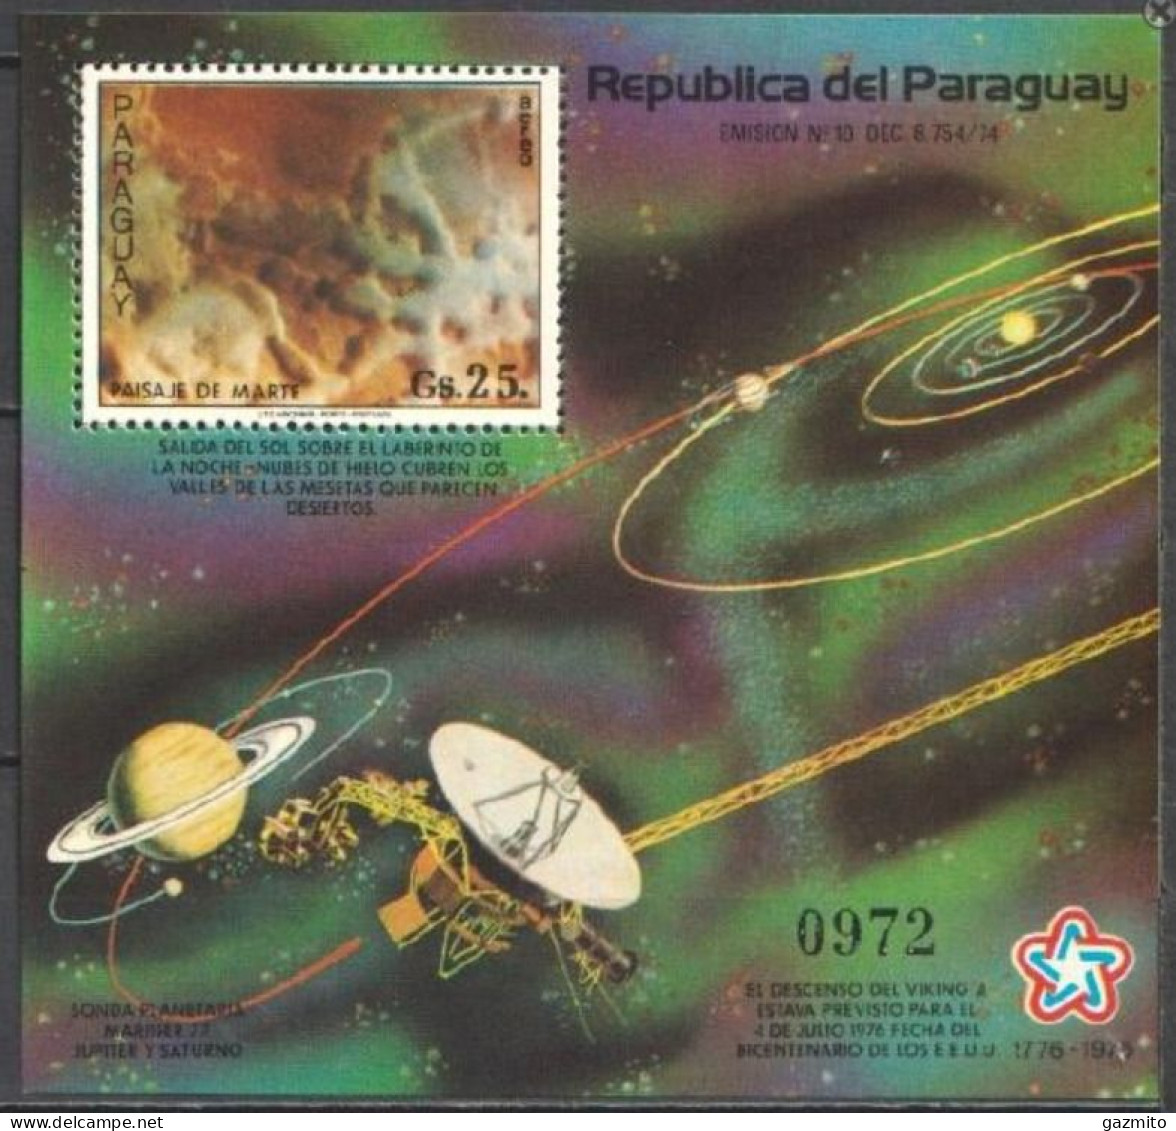 Paraguay 1976, 200th Independence USA, Mars Explorer, BF - Indépendance USA